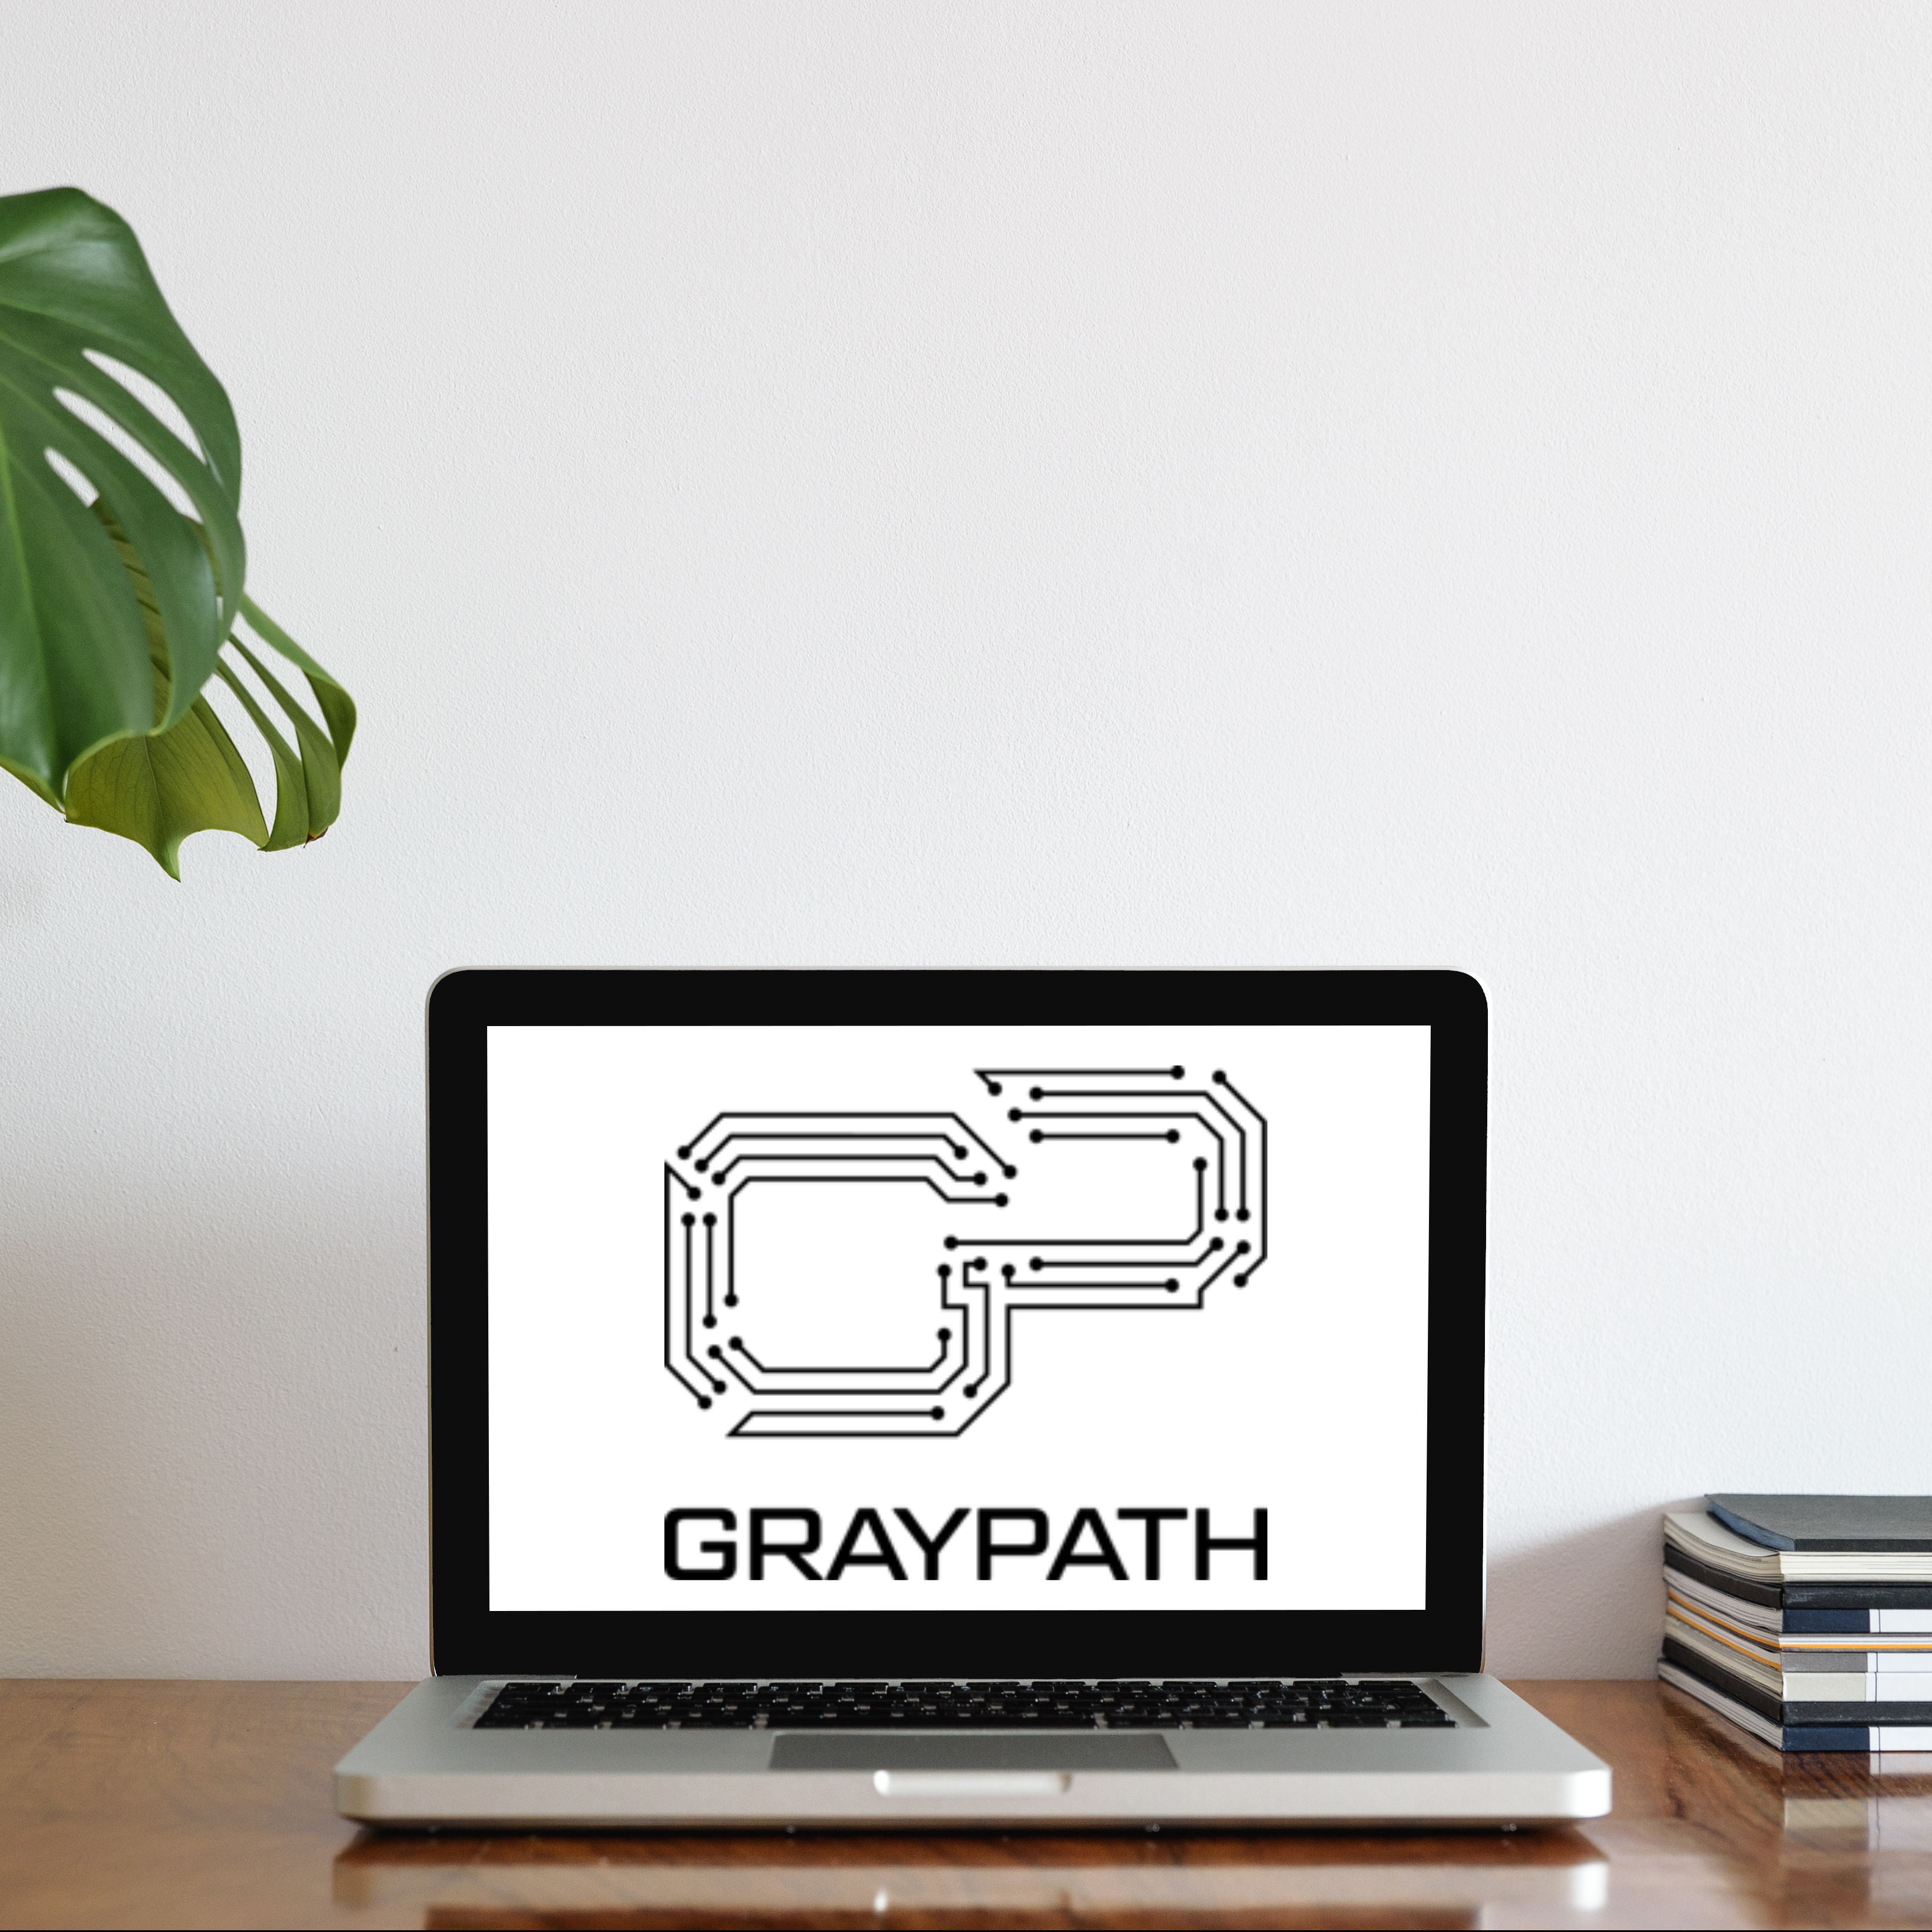 GRAYPATH 30-Day Network Demo Image - Computer on desk